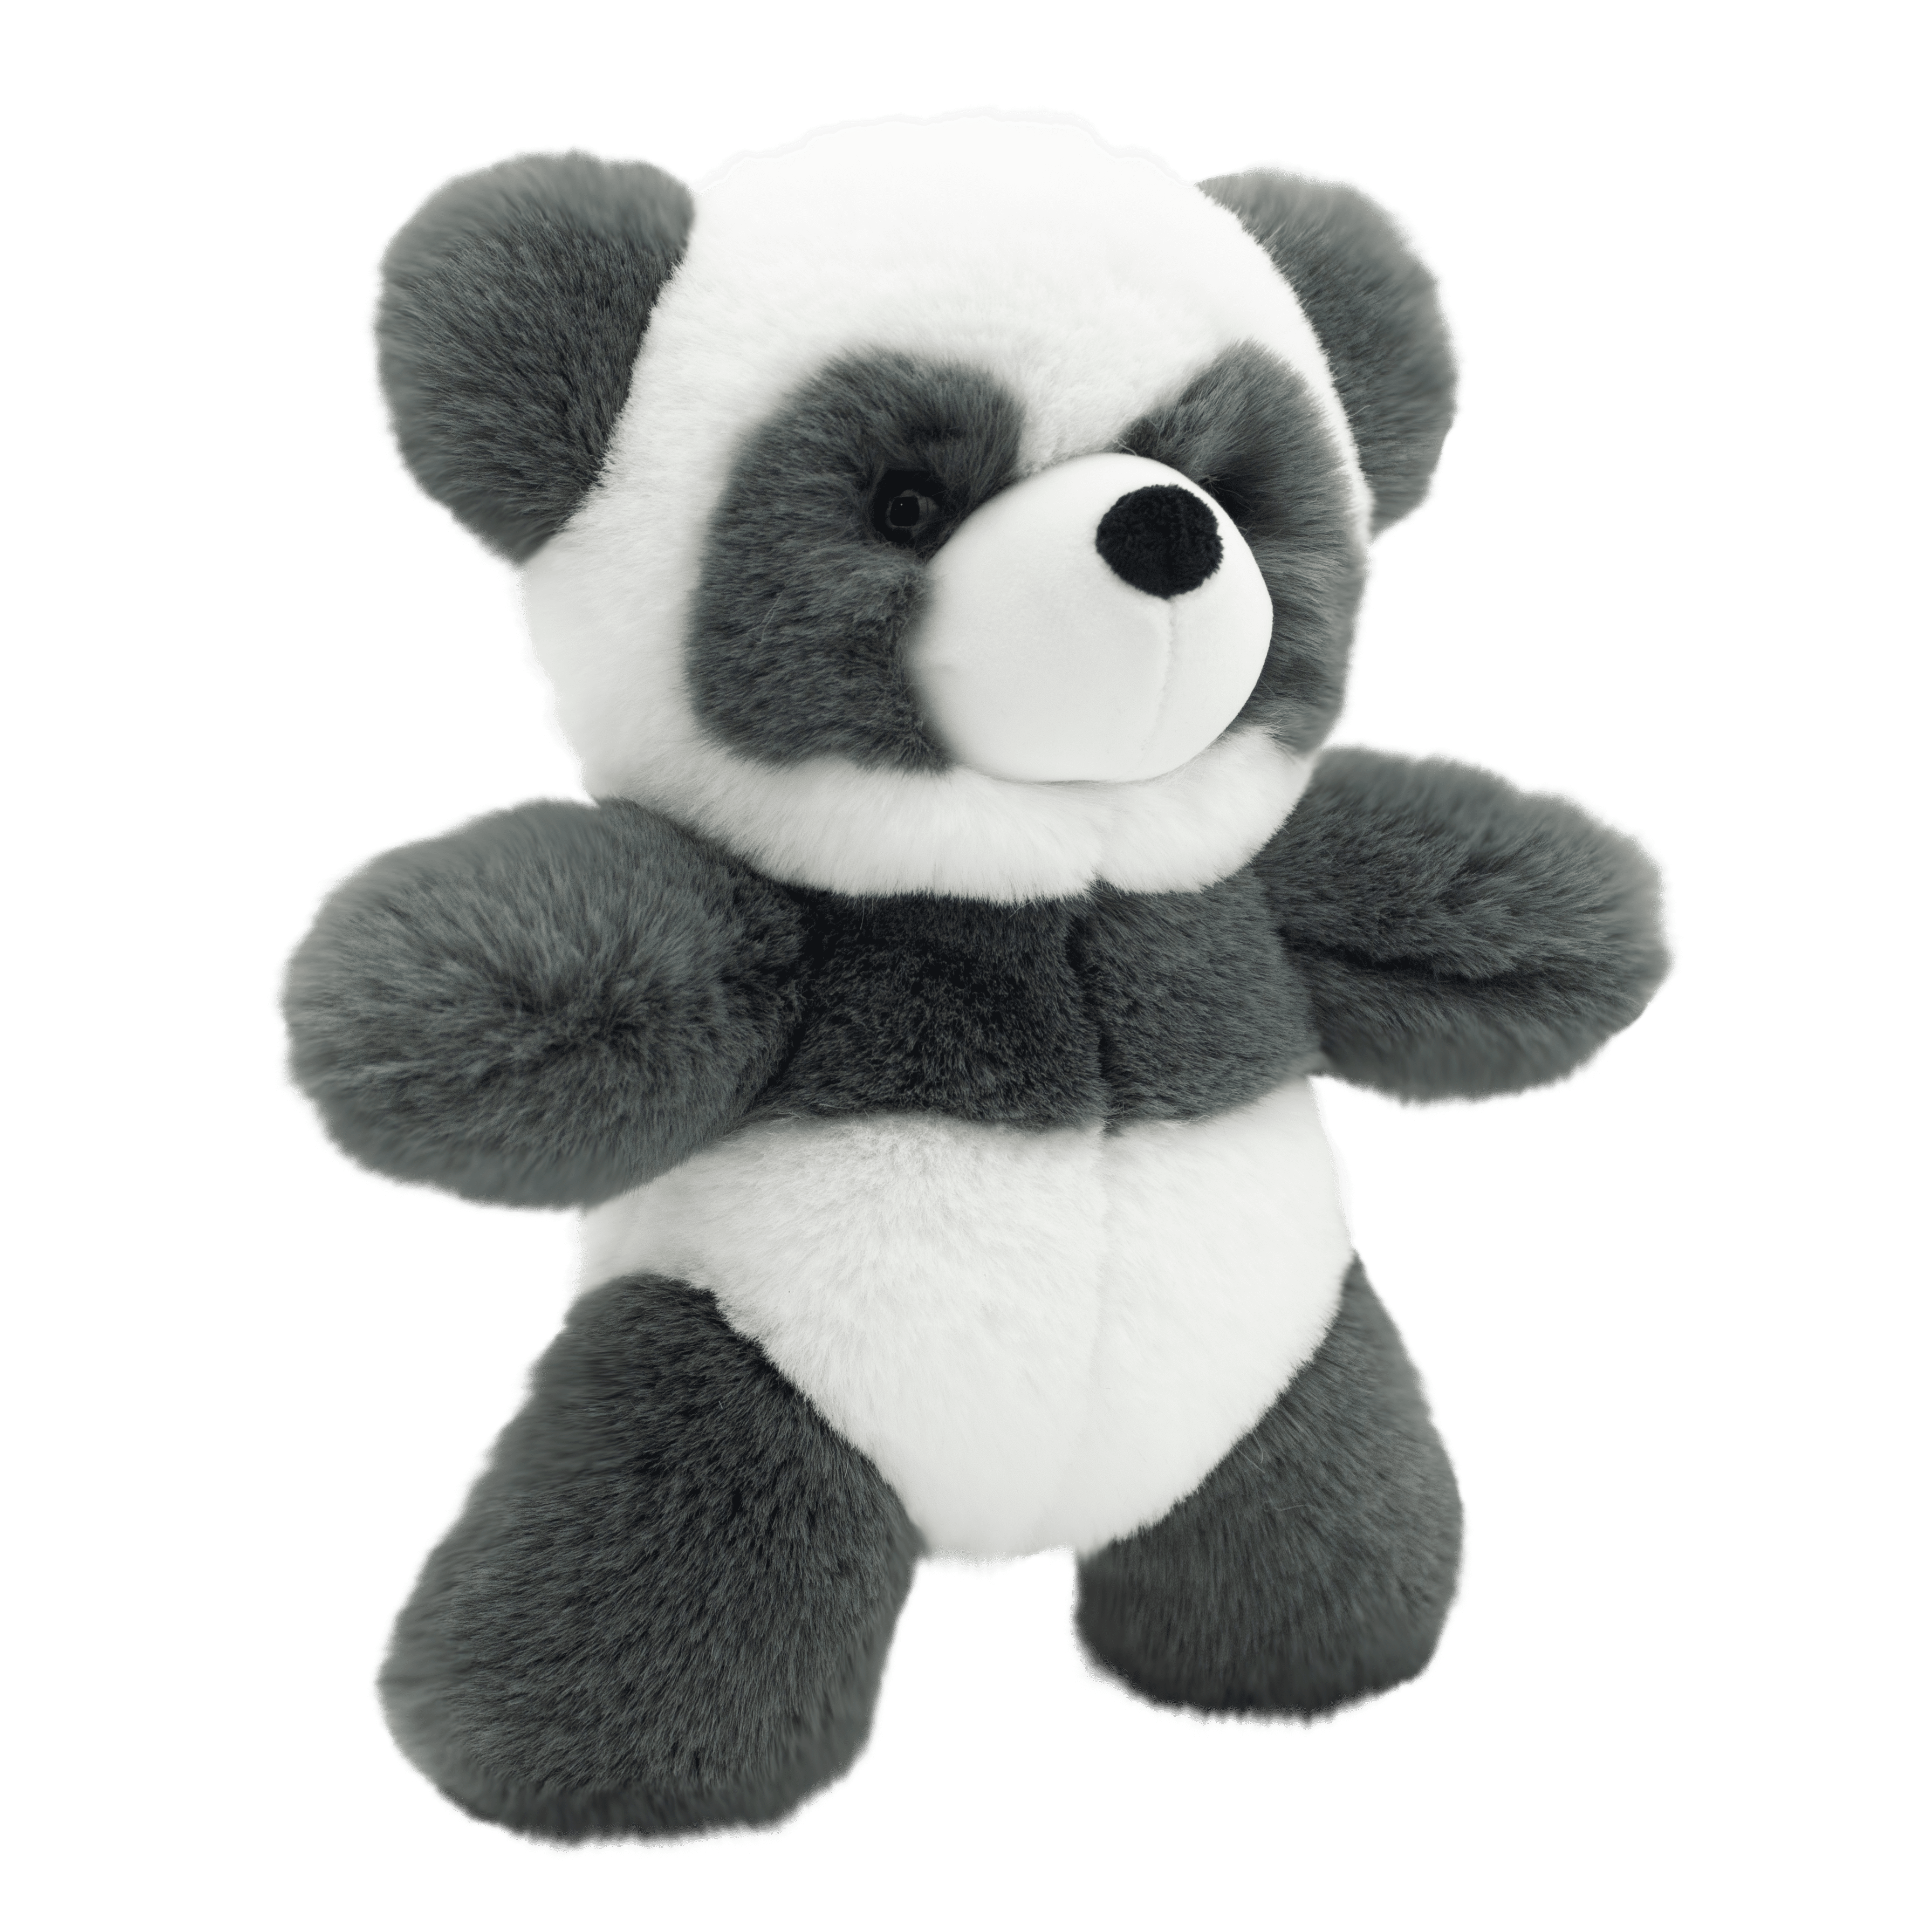 LotFancy Panda Stuffed Animal, 12'' Soft Cuddly Baby Panda Plush Toy, Cute  Plushies for Kids, White and Black, Easter Decorations